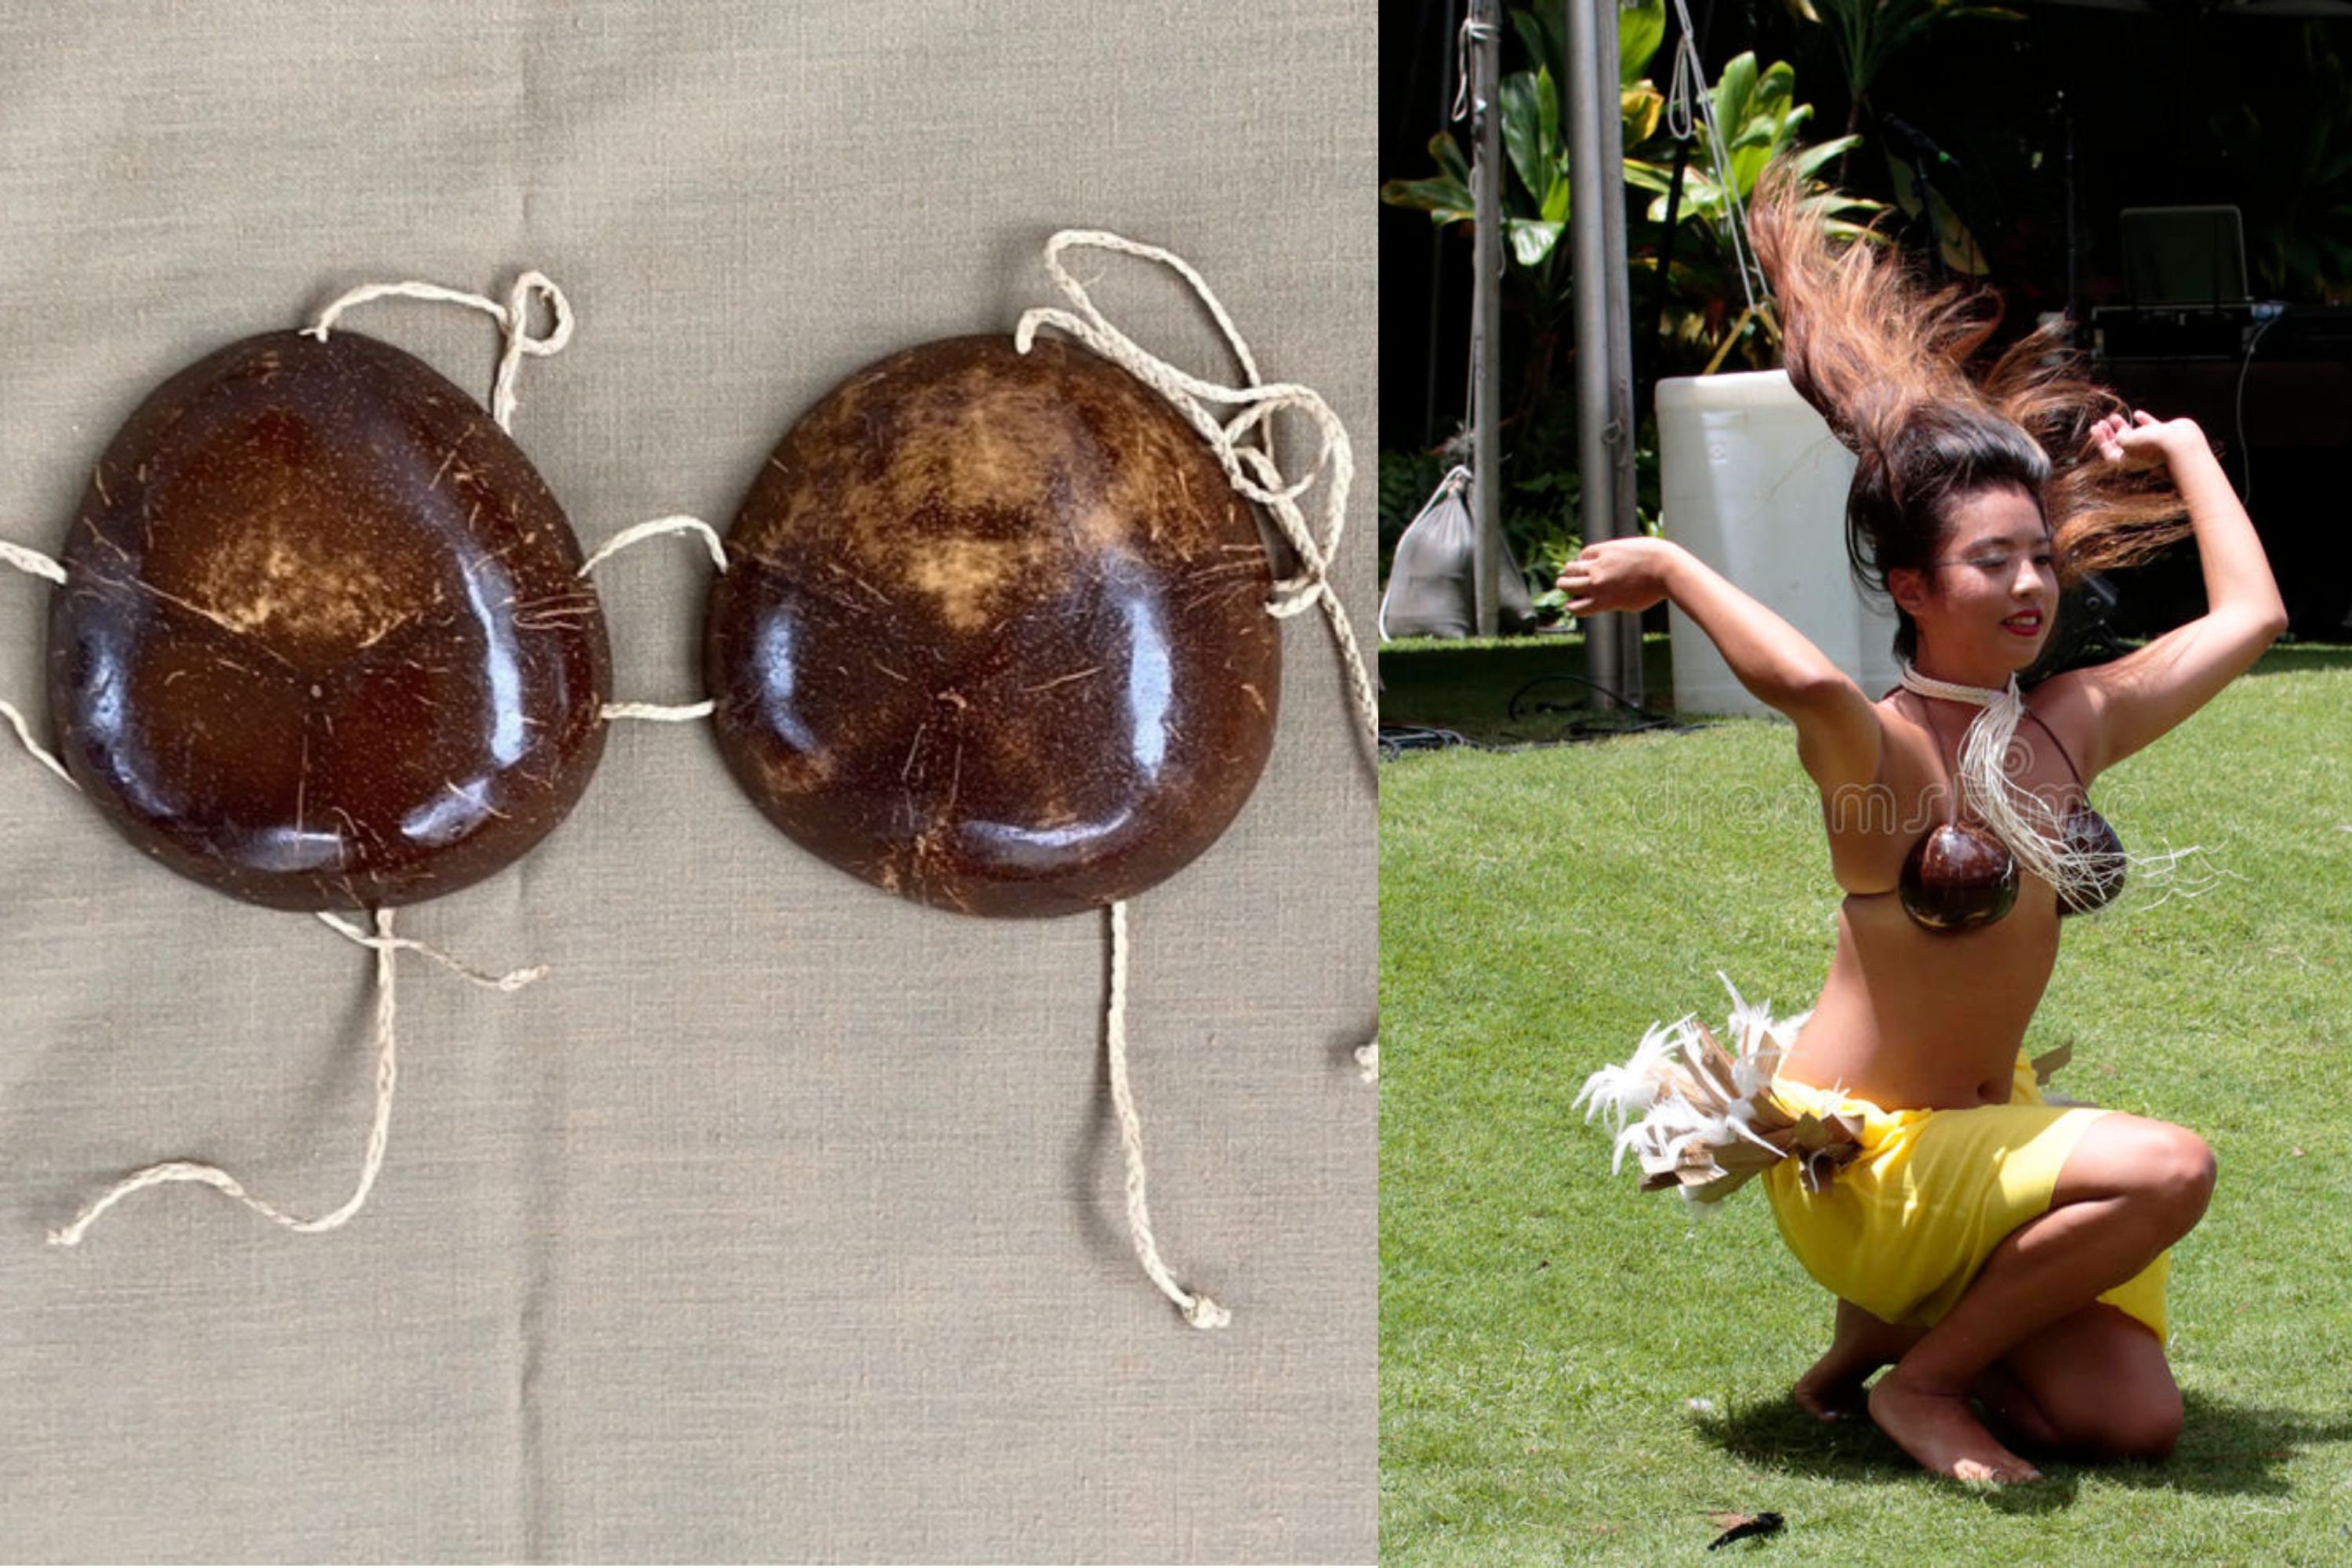 4 Pcs Coconut Bra Hula Skirt Set Coconut Bra and Grass Skirt Coconut Bra  Adult Size Flower Waist Grass Skirt Coconut Shell Bra Bikini Hawaiian